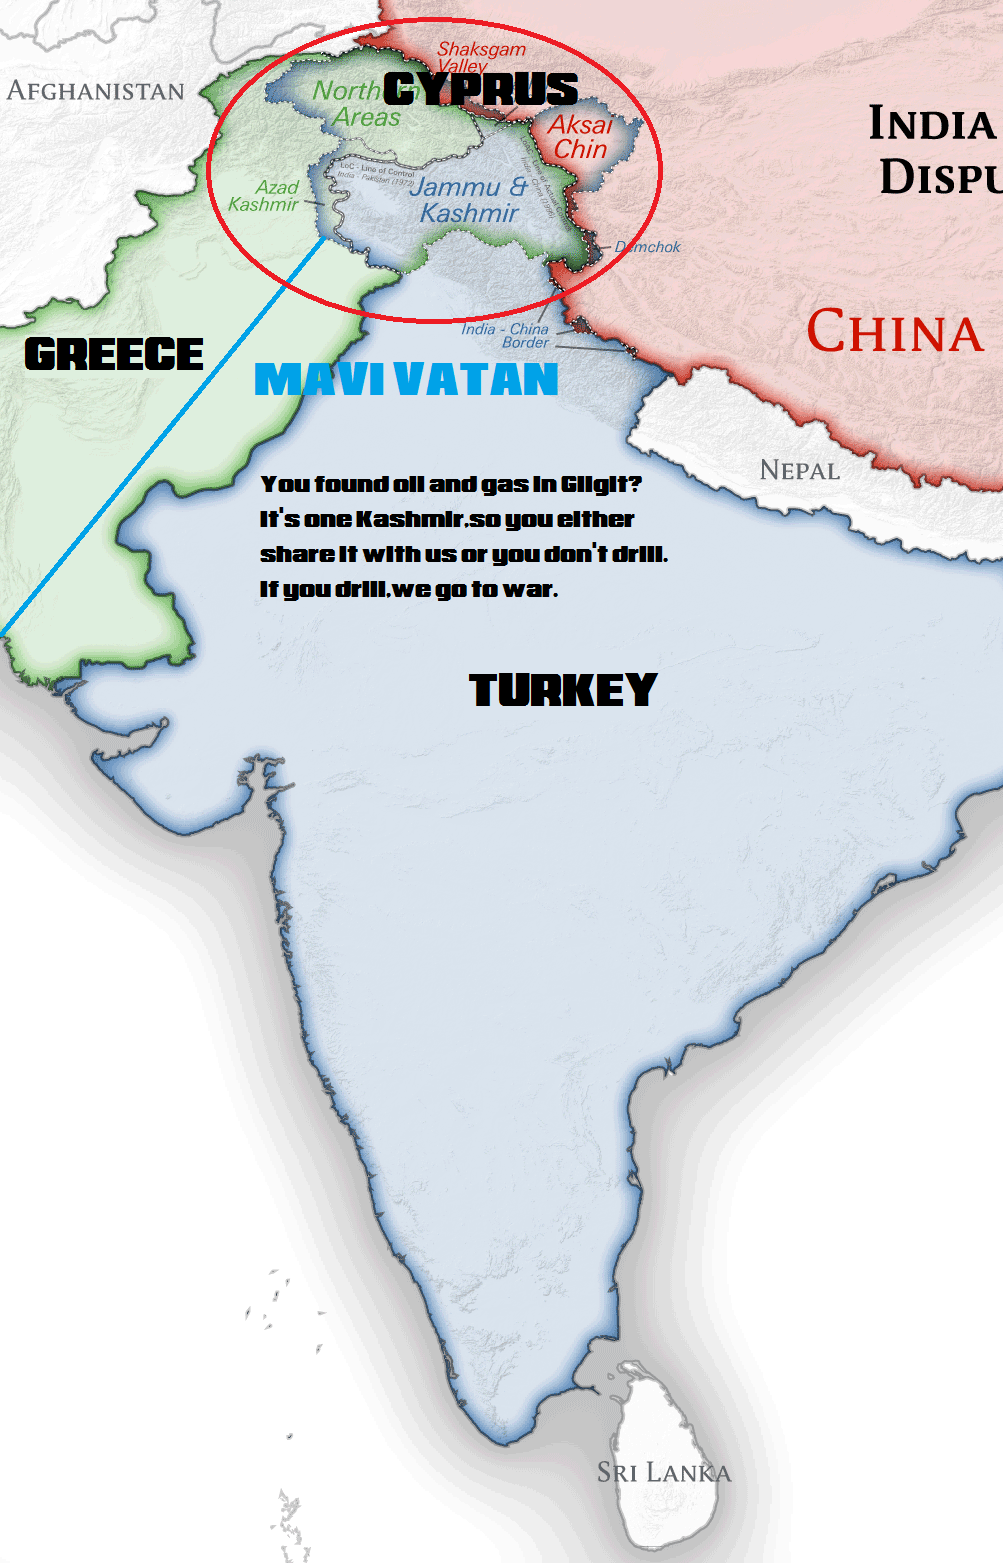 India_Pakistan_China_Disputed_Areas_Map.png